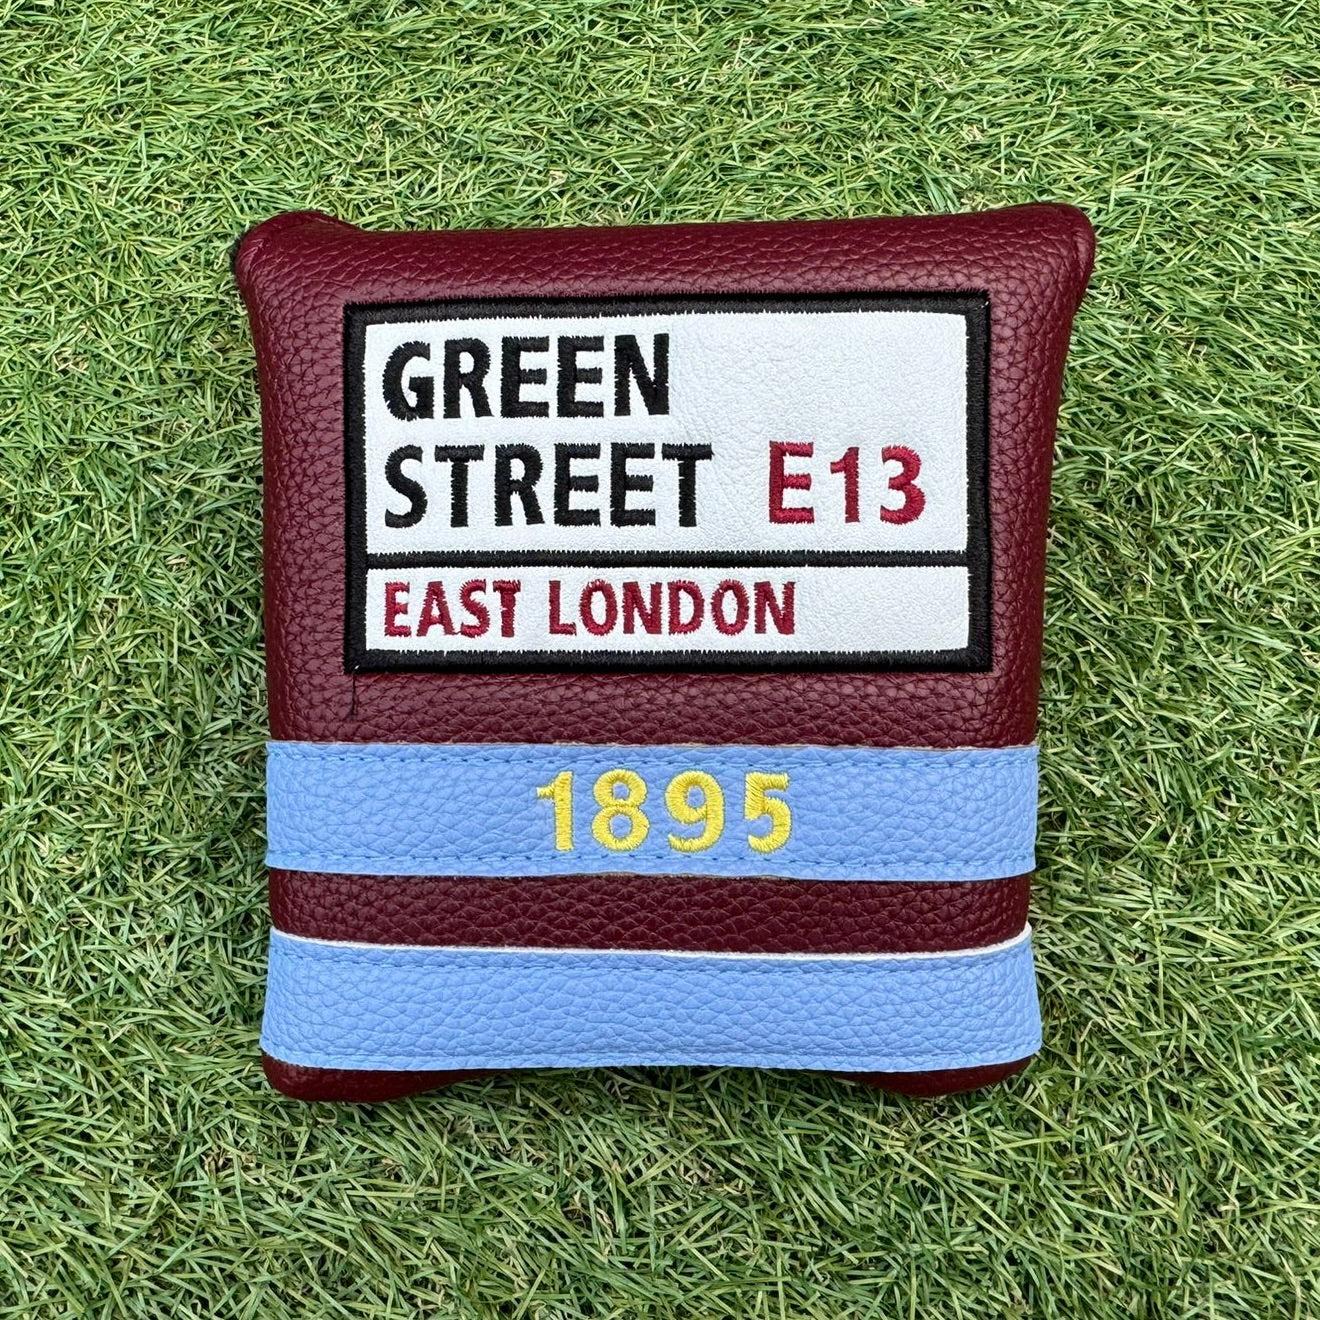 West Ham (Green Street) Mallet Headcover